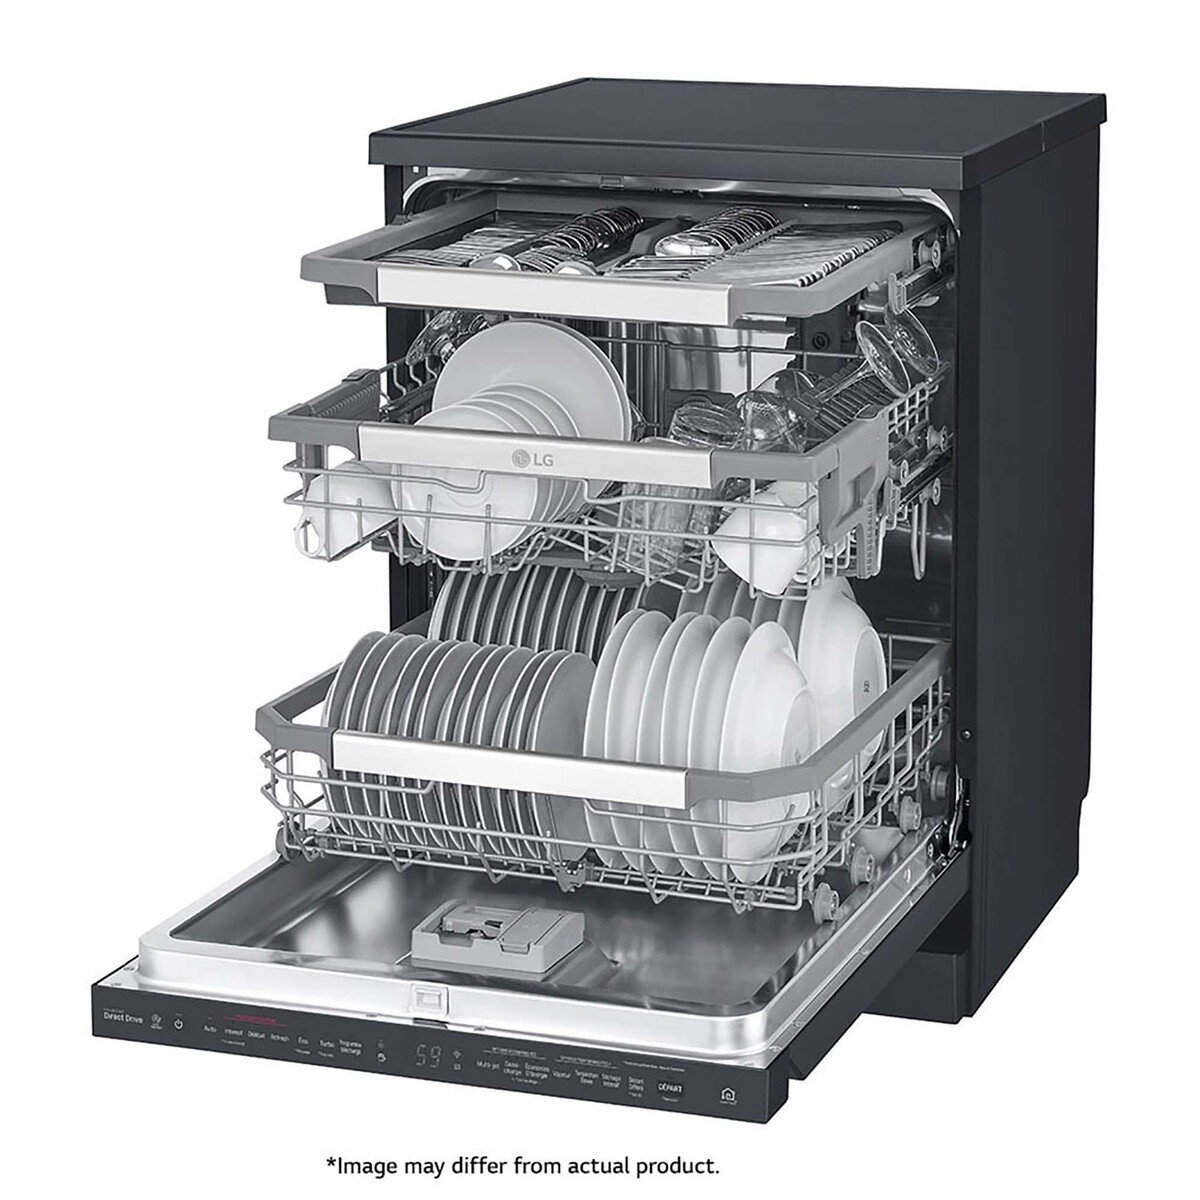 LG Dishwasher DFB325HM 10 Programs